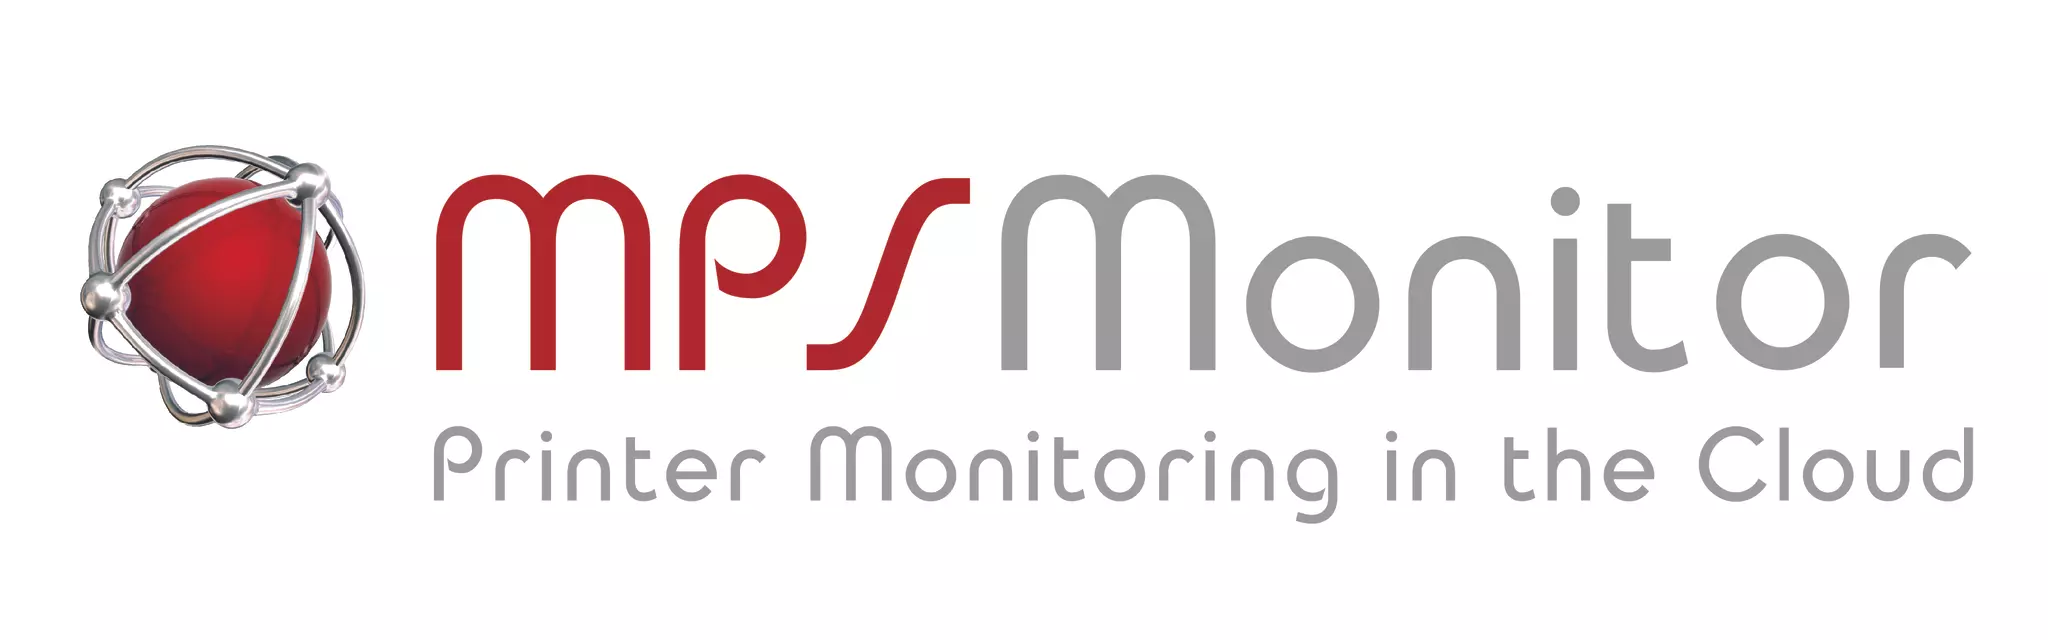 logo_mpsmonitor-printer-monitoring-in-the-cloud-def.jpg